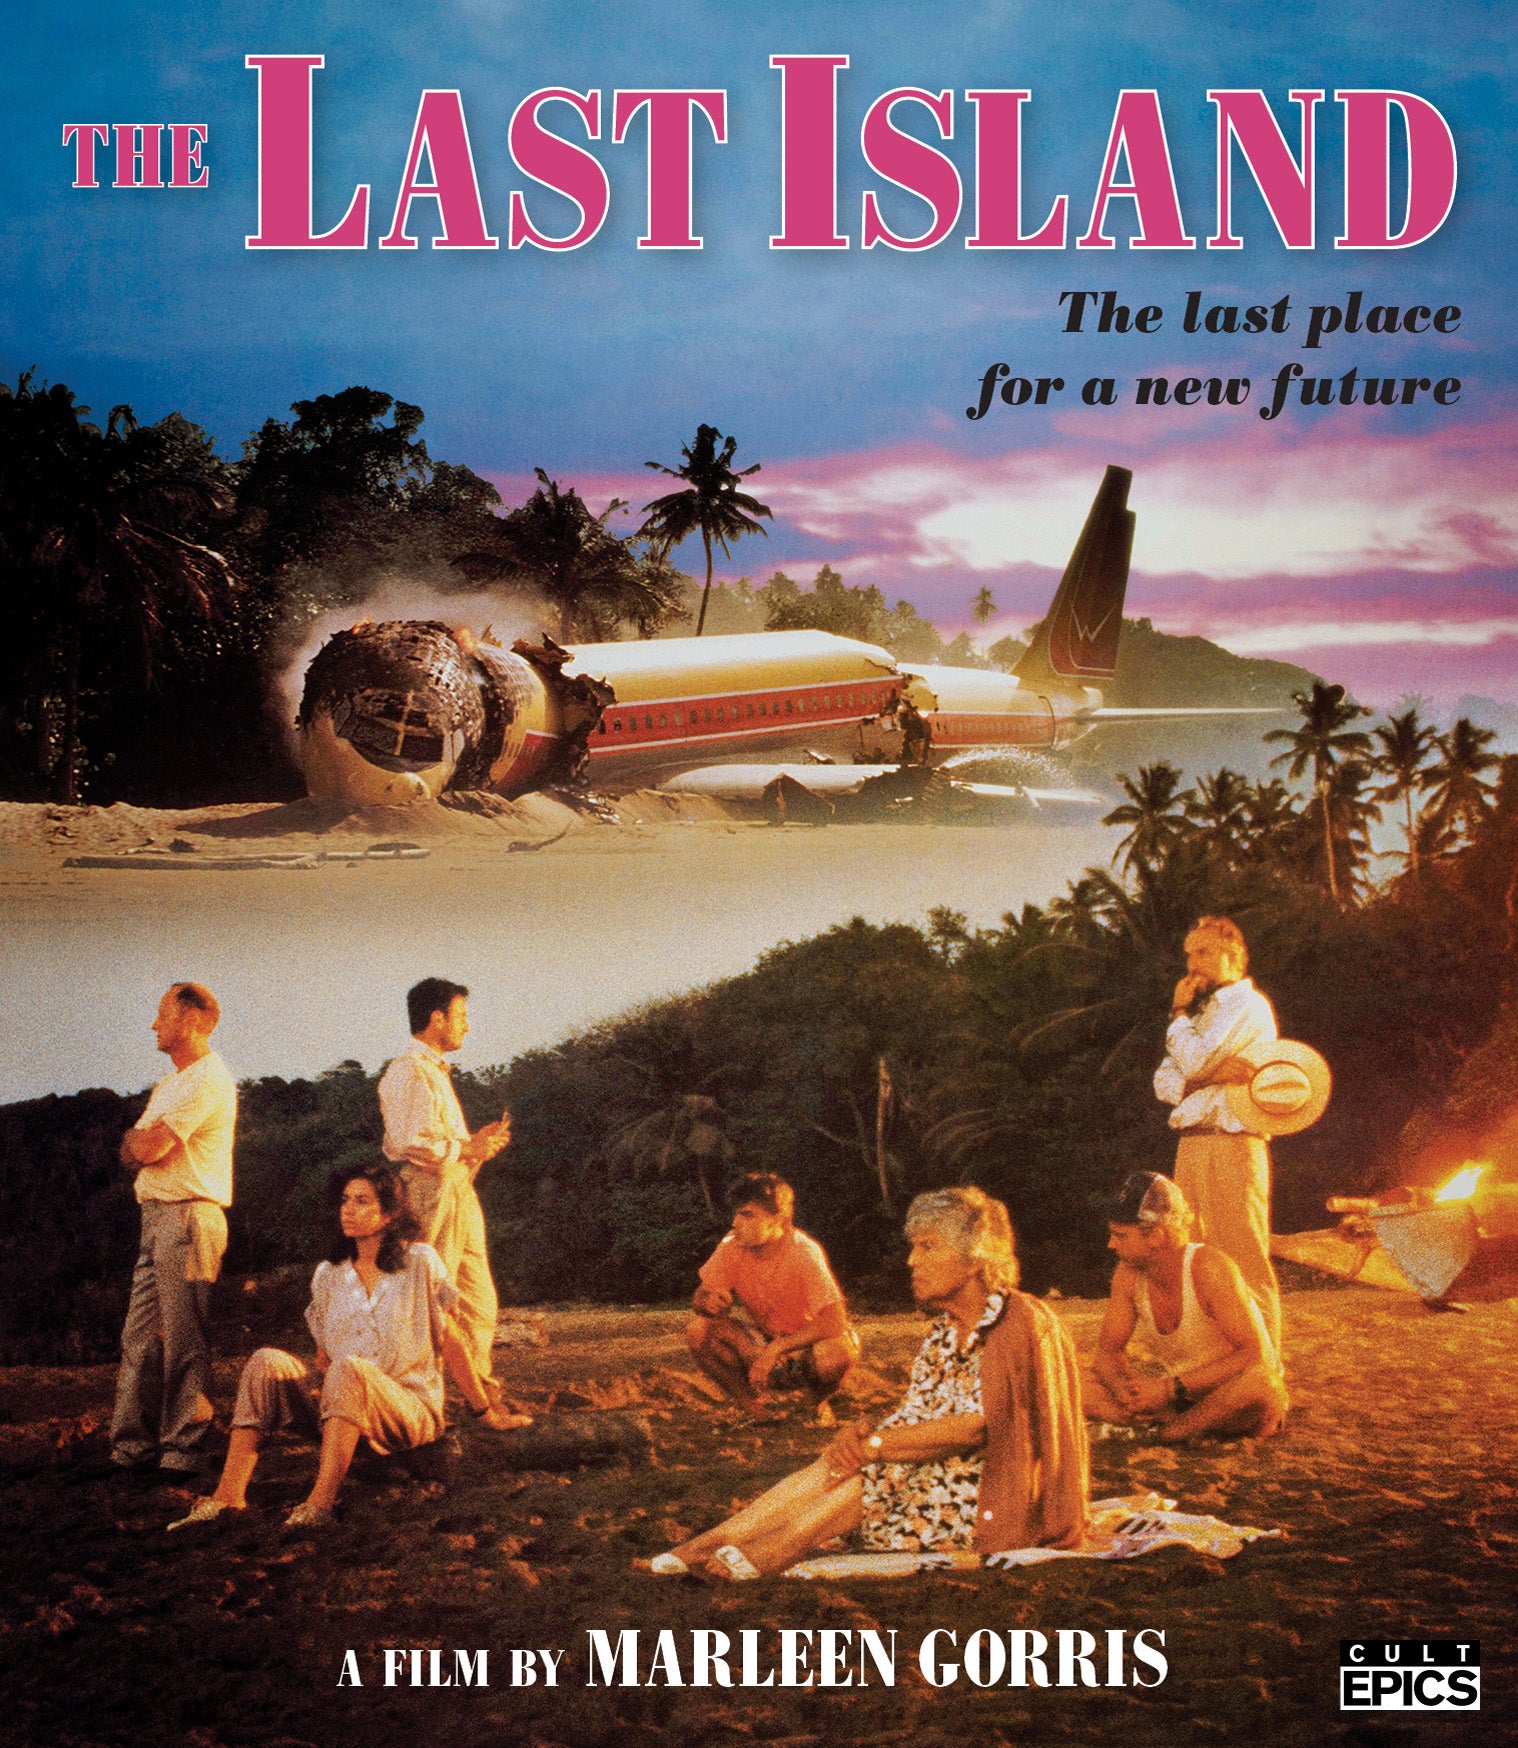 THE LAST ISLAND BLU-RAY